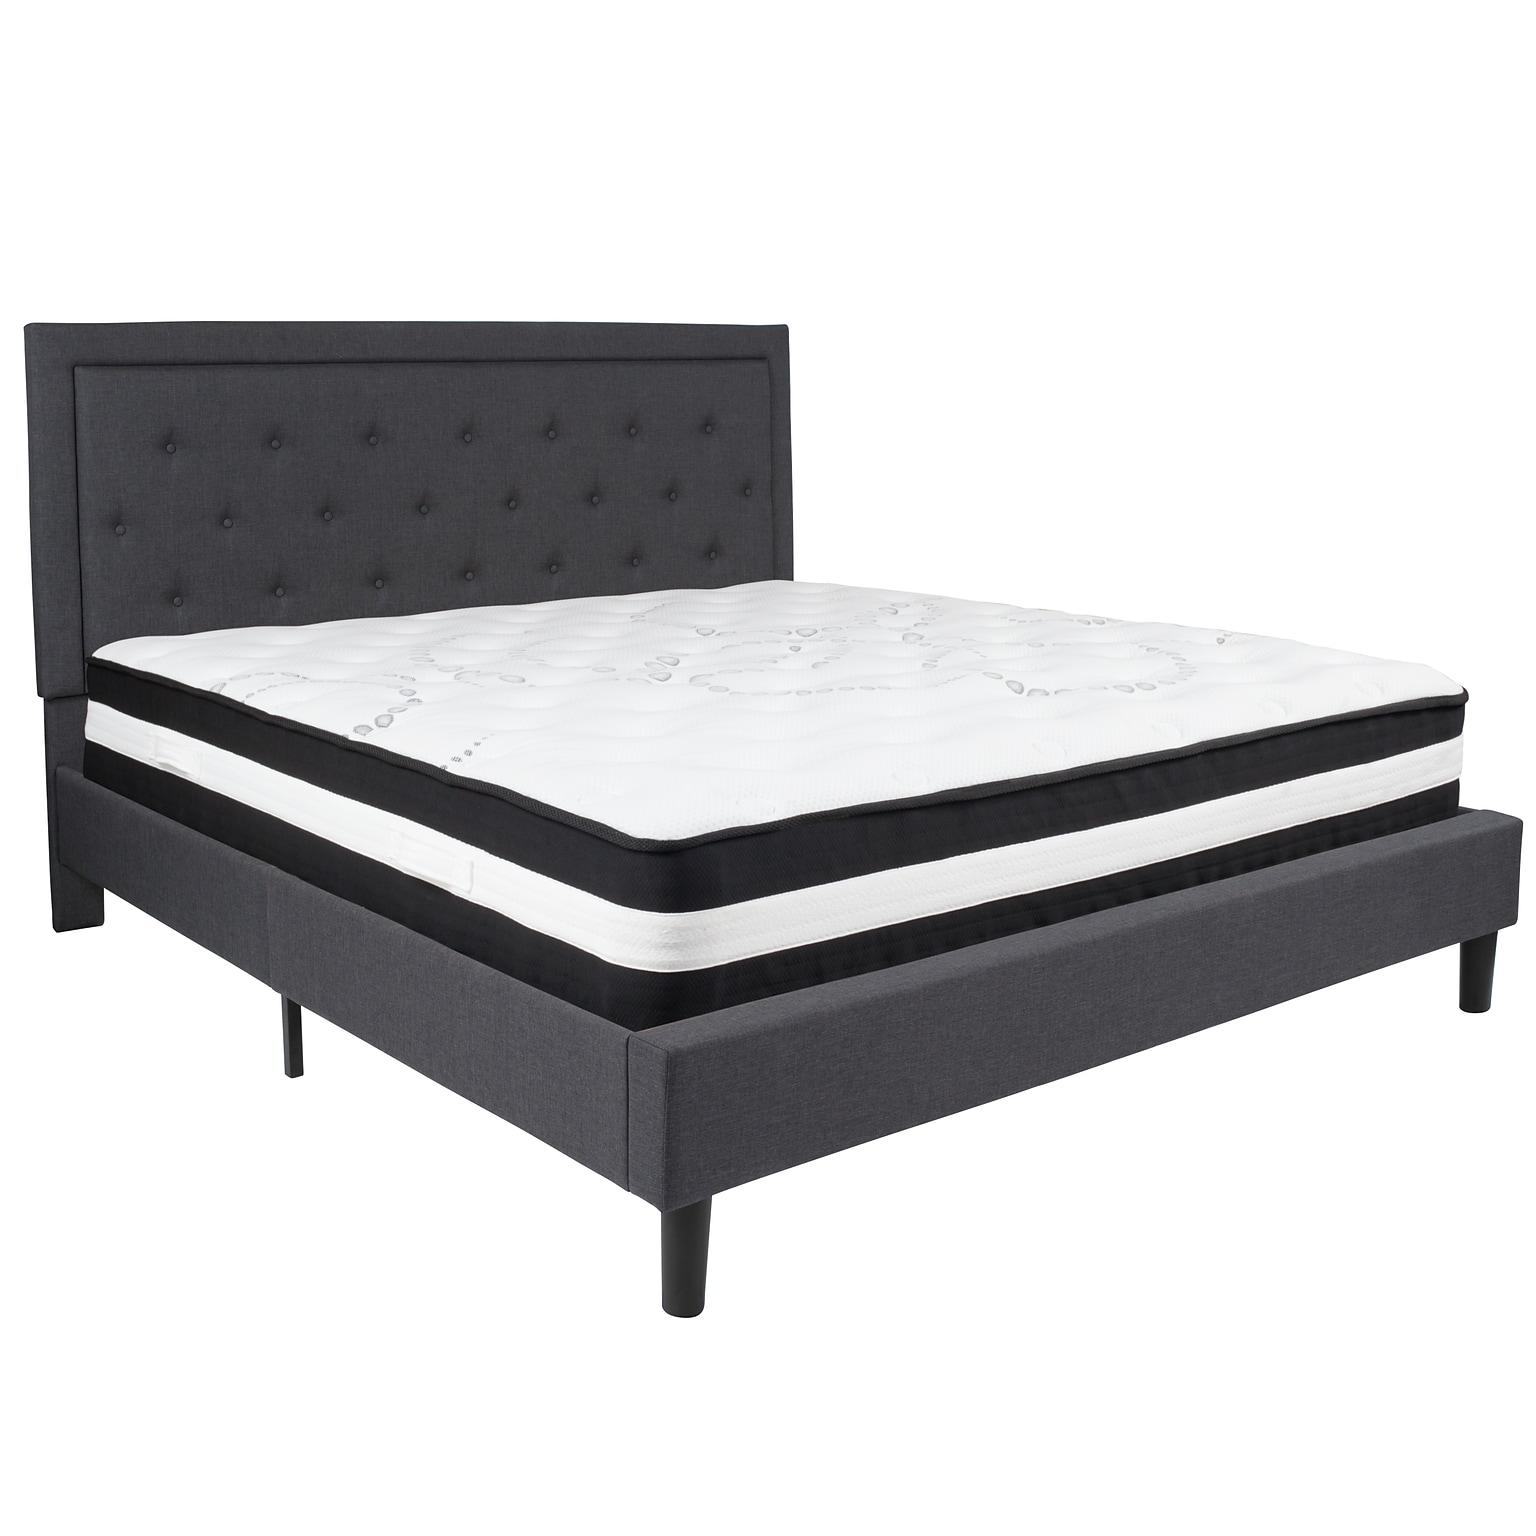 Flash Furniture Roxbury Tufted Upholstered Platform Bed in Dark Gray Fabric with Pocket Spring Mattress, King (SLBM32)